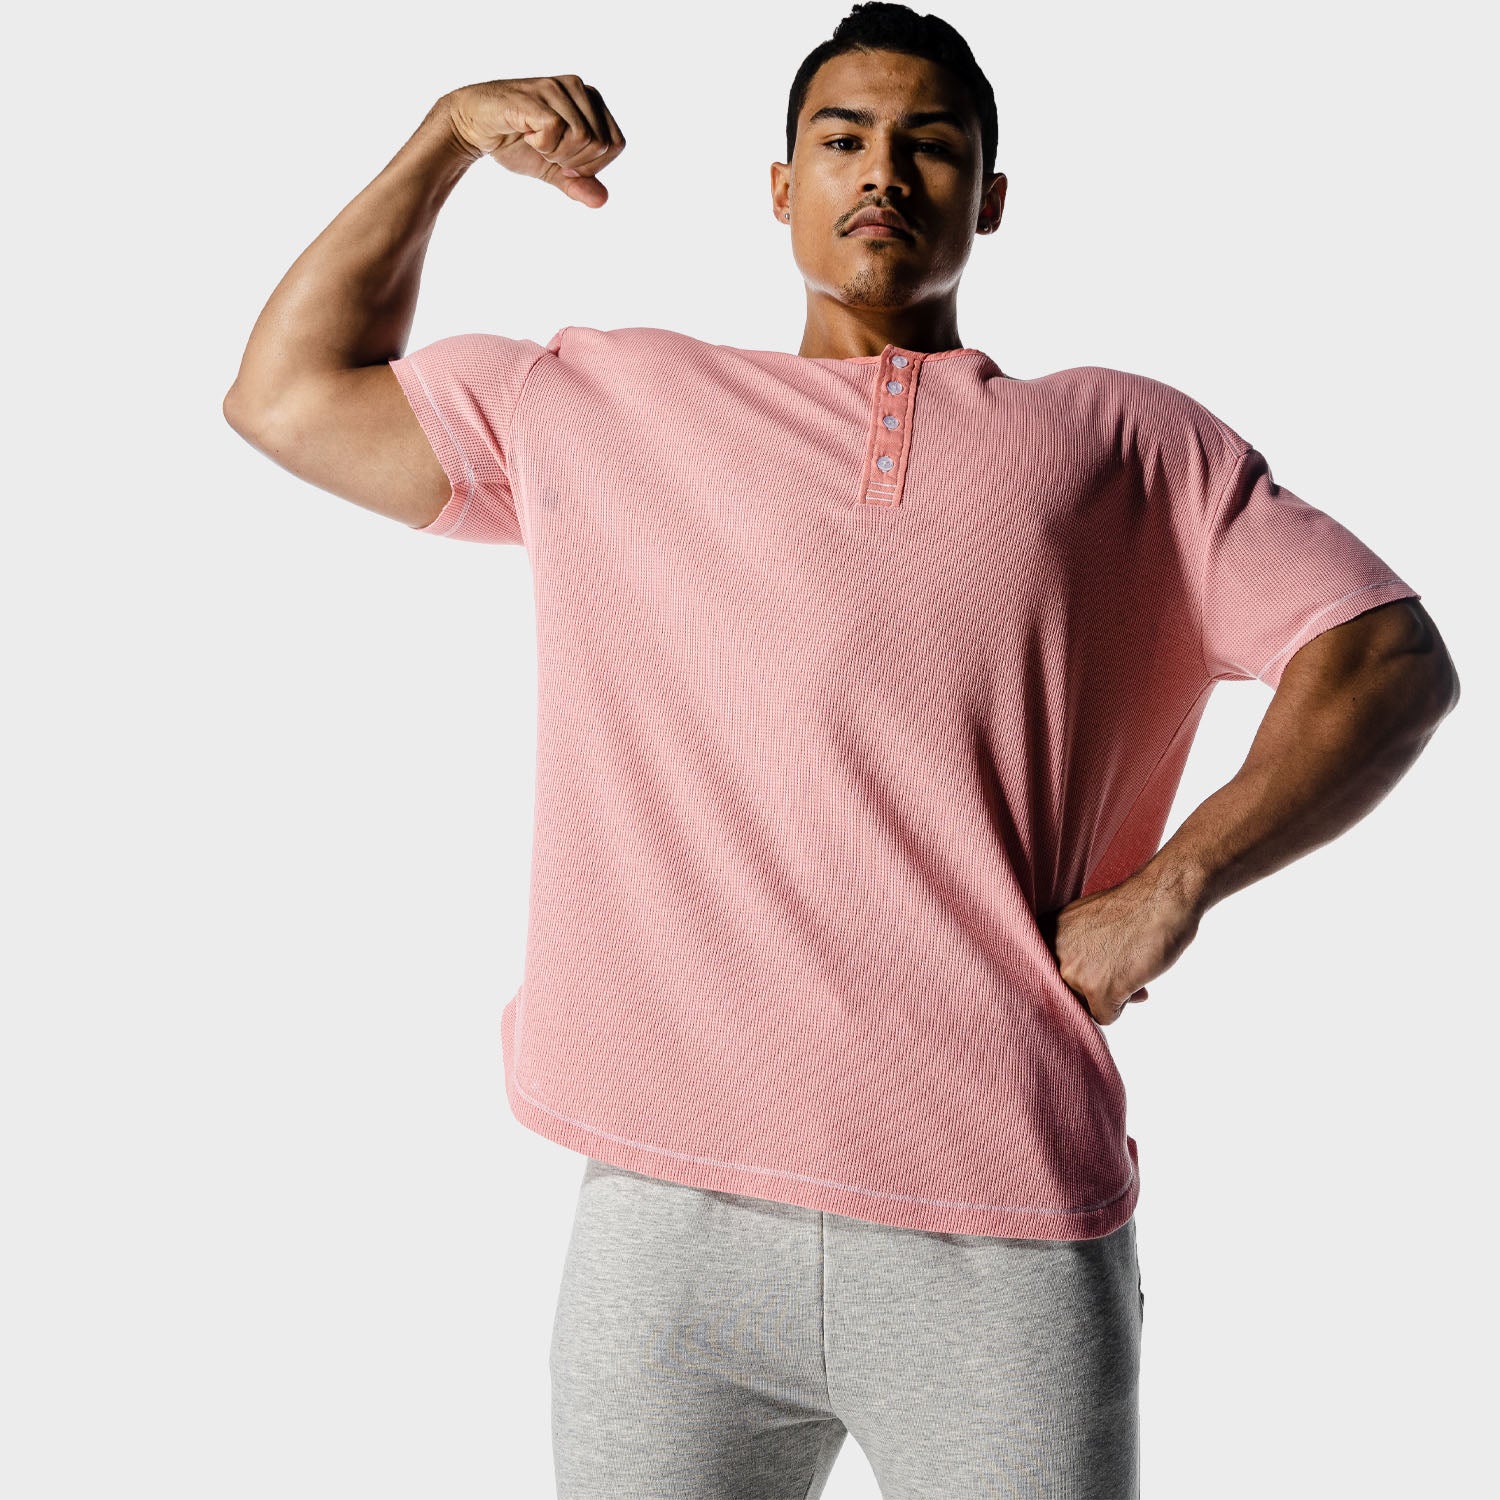 squatwolf-workout-shirts-golden-era-waffle-top-flamingo-pink-gym-wear-for-men